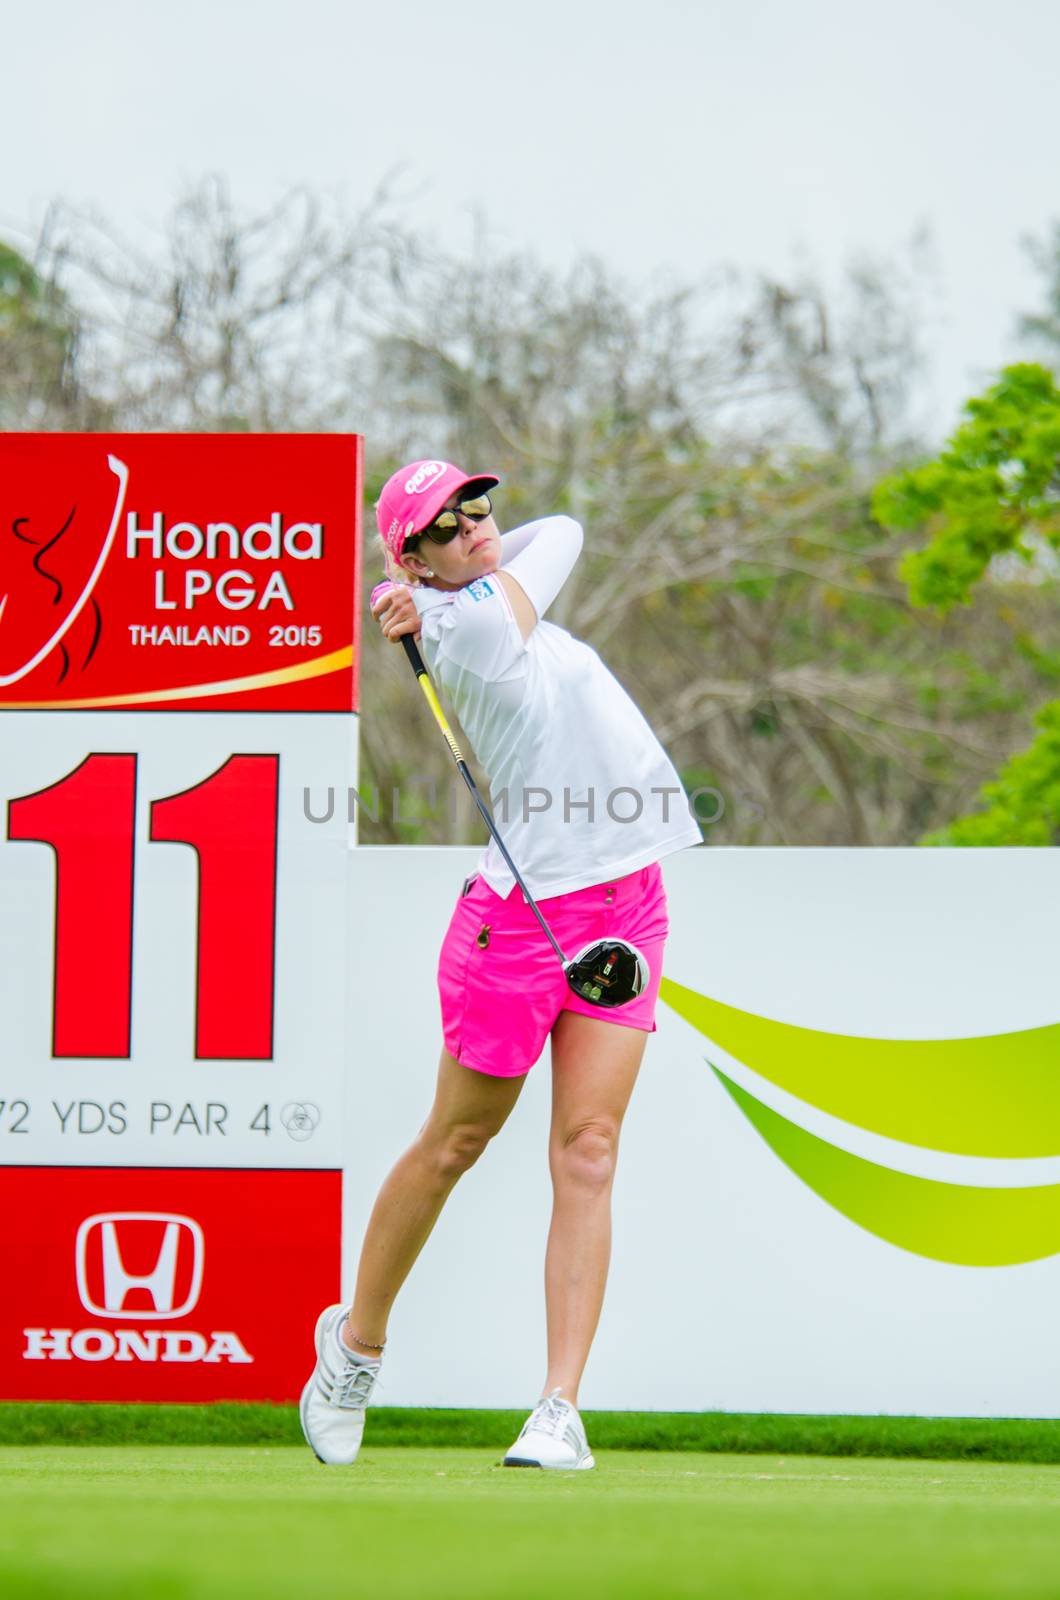 CHONBURI - MARCH 1: Paula Creamer of USA in Honda LPGA Thailand 2015 at Siam Country Club, Pattaya Old Course on March 1, 2015 in Chonburi, Thailand.